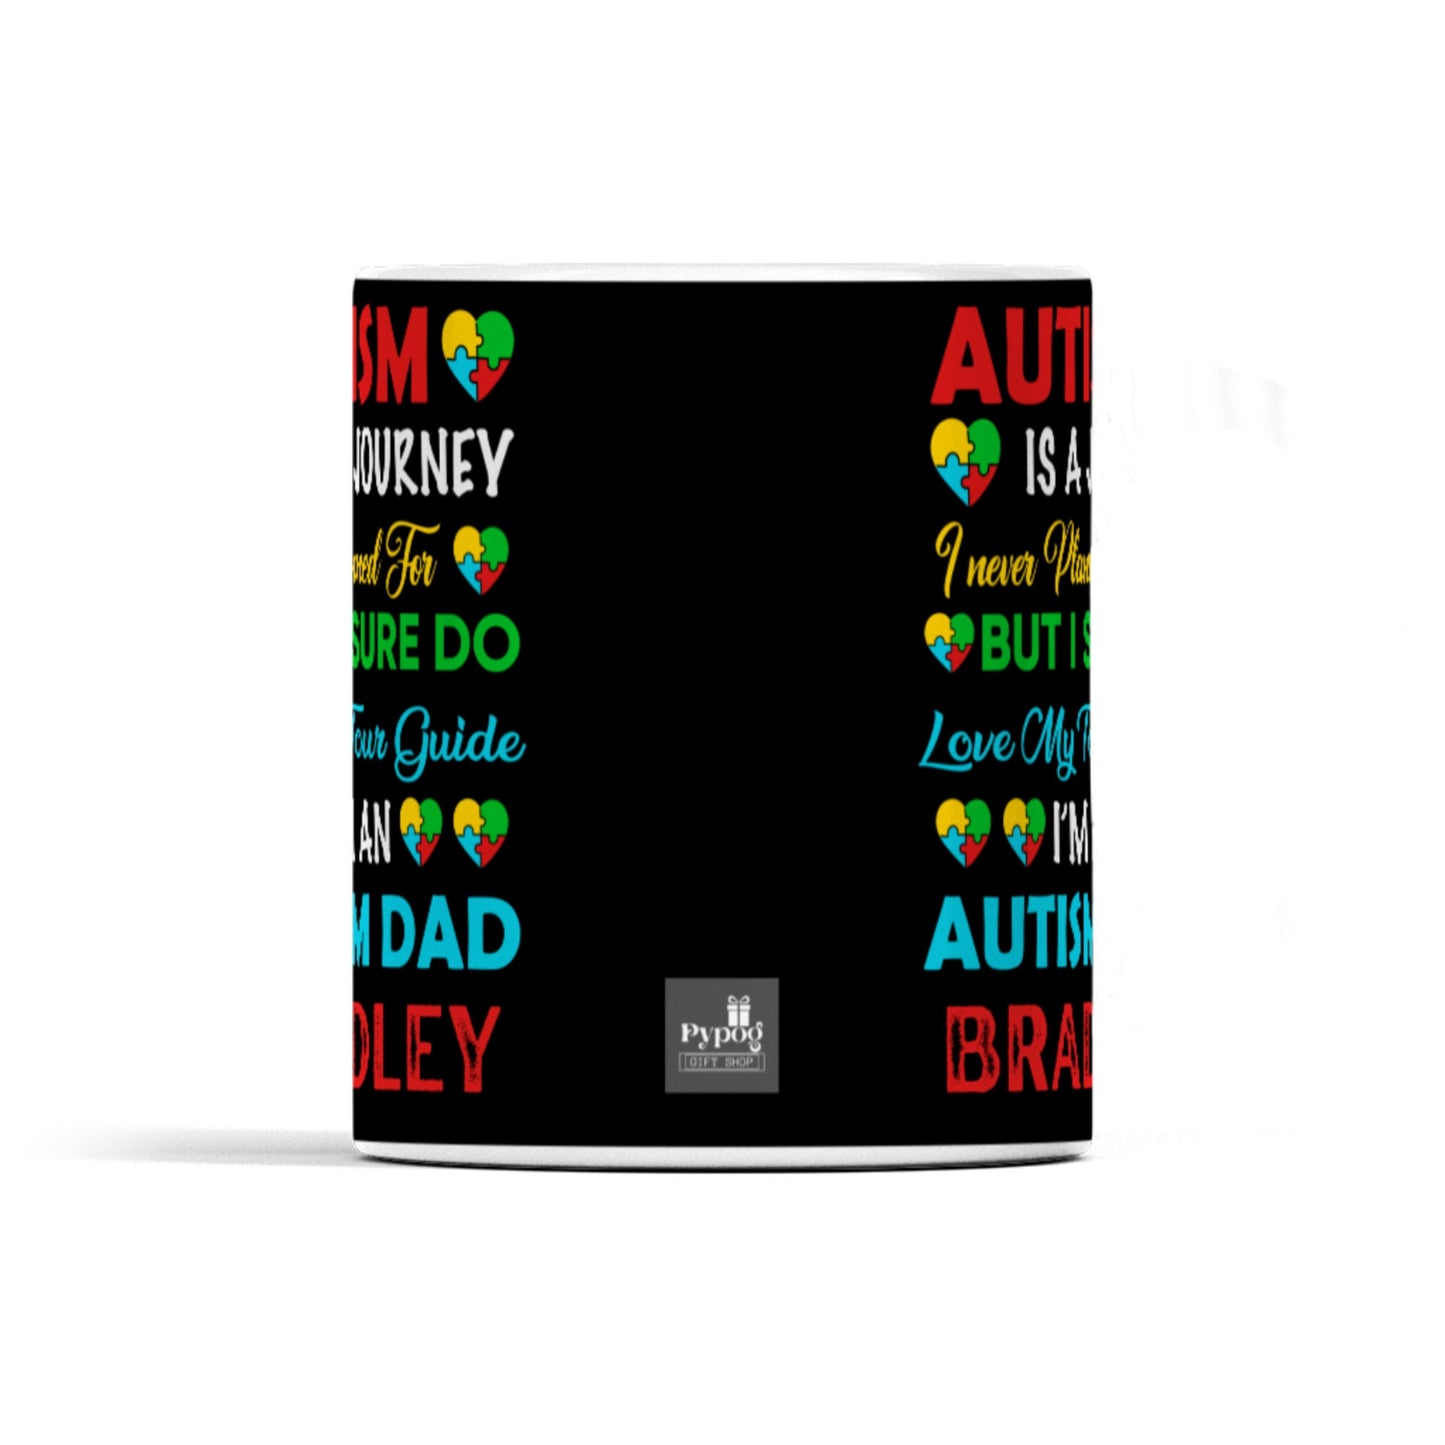 Autism dad personalised mug